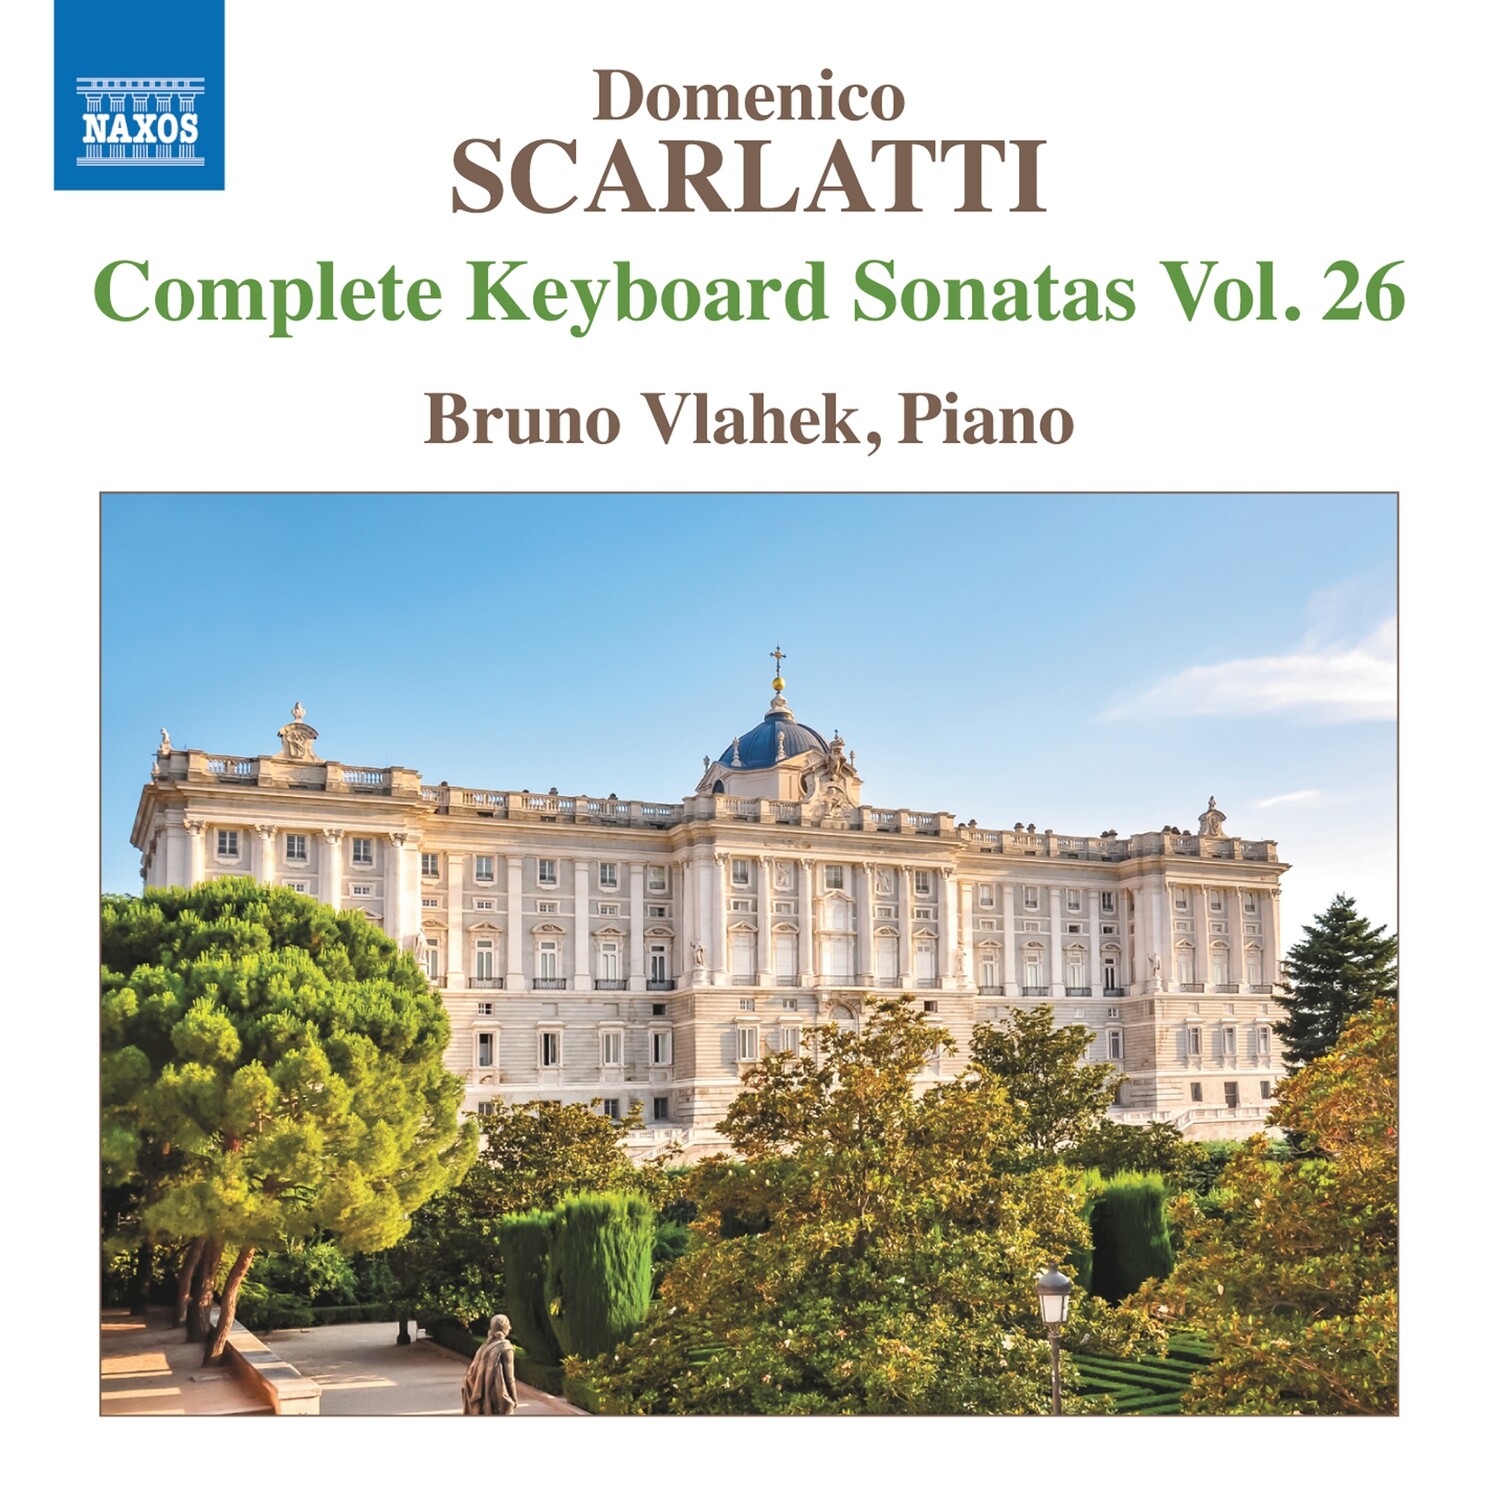 SCARLATTI COMPLETE KEYBOARD SONATAS Vol. 26 CD / BRUNO VLAHEK